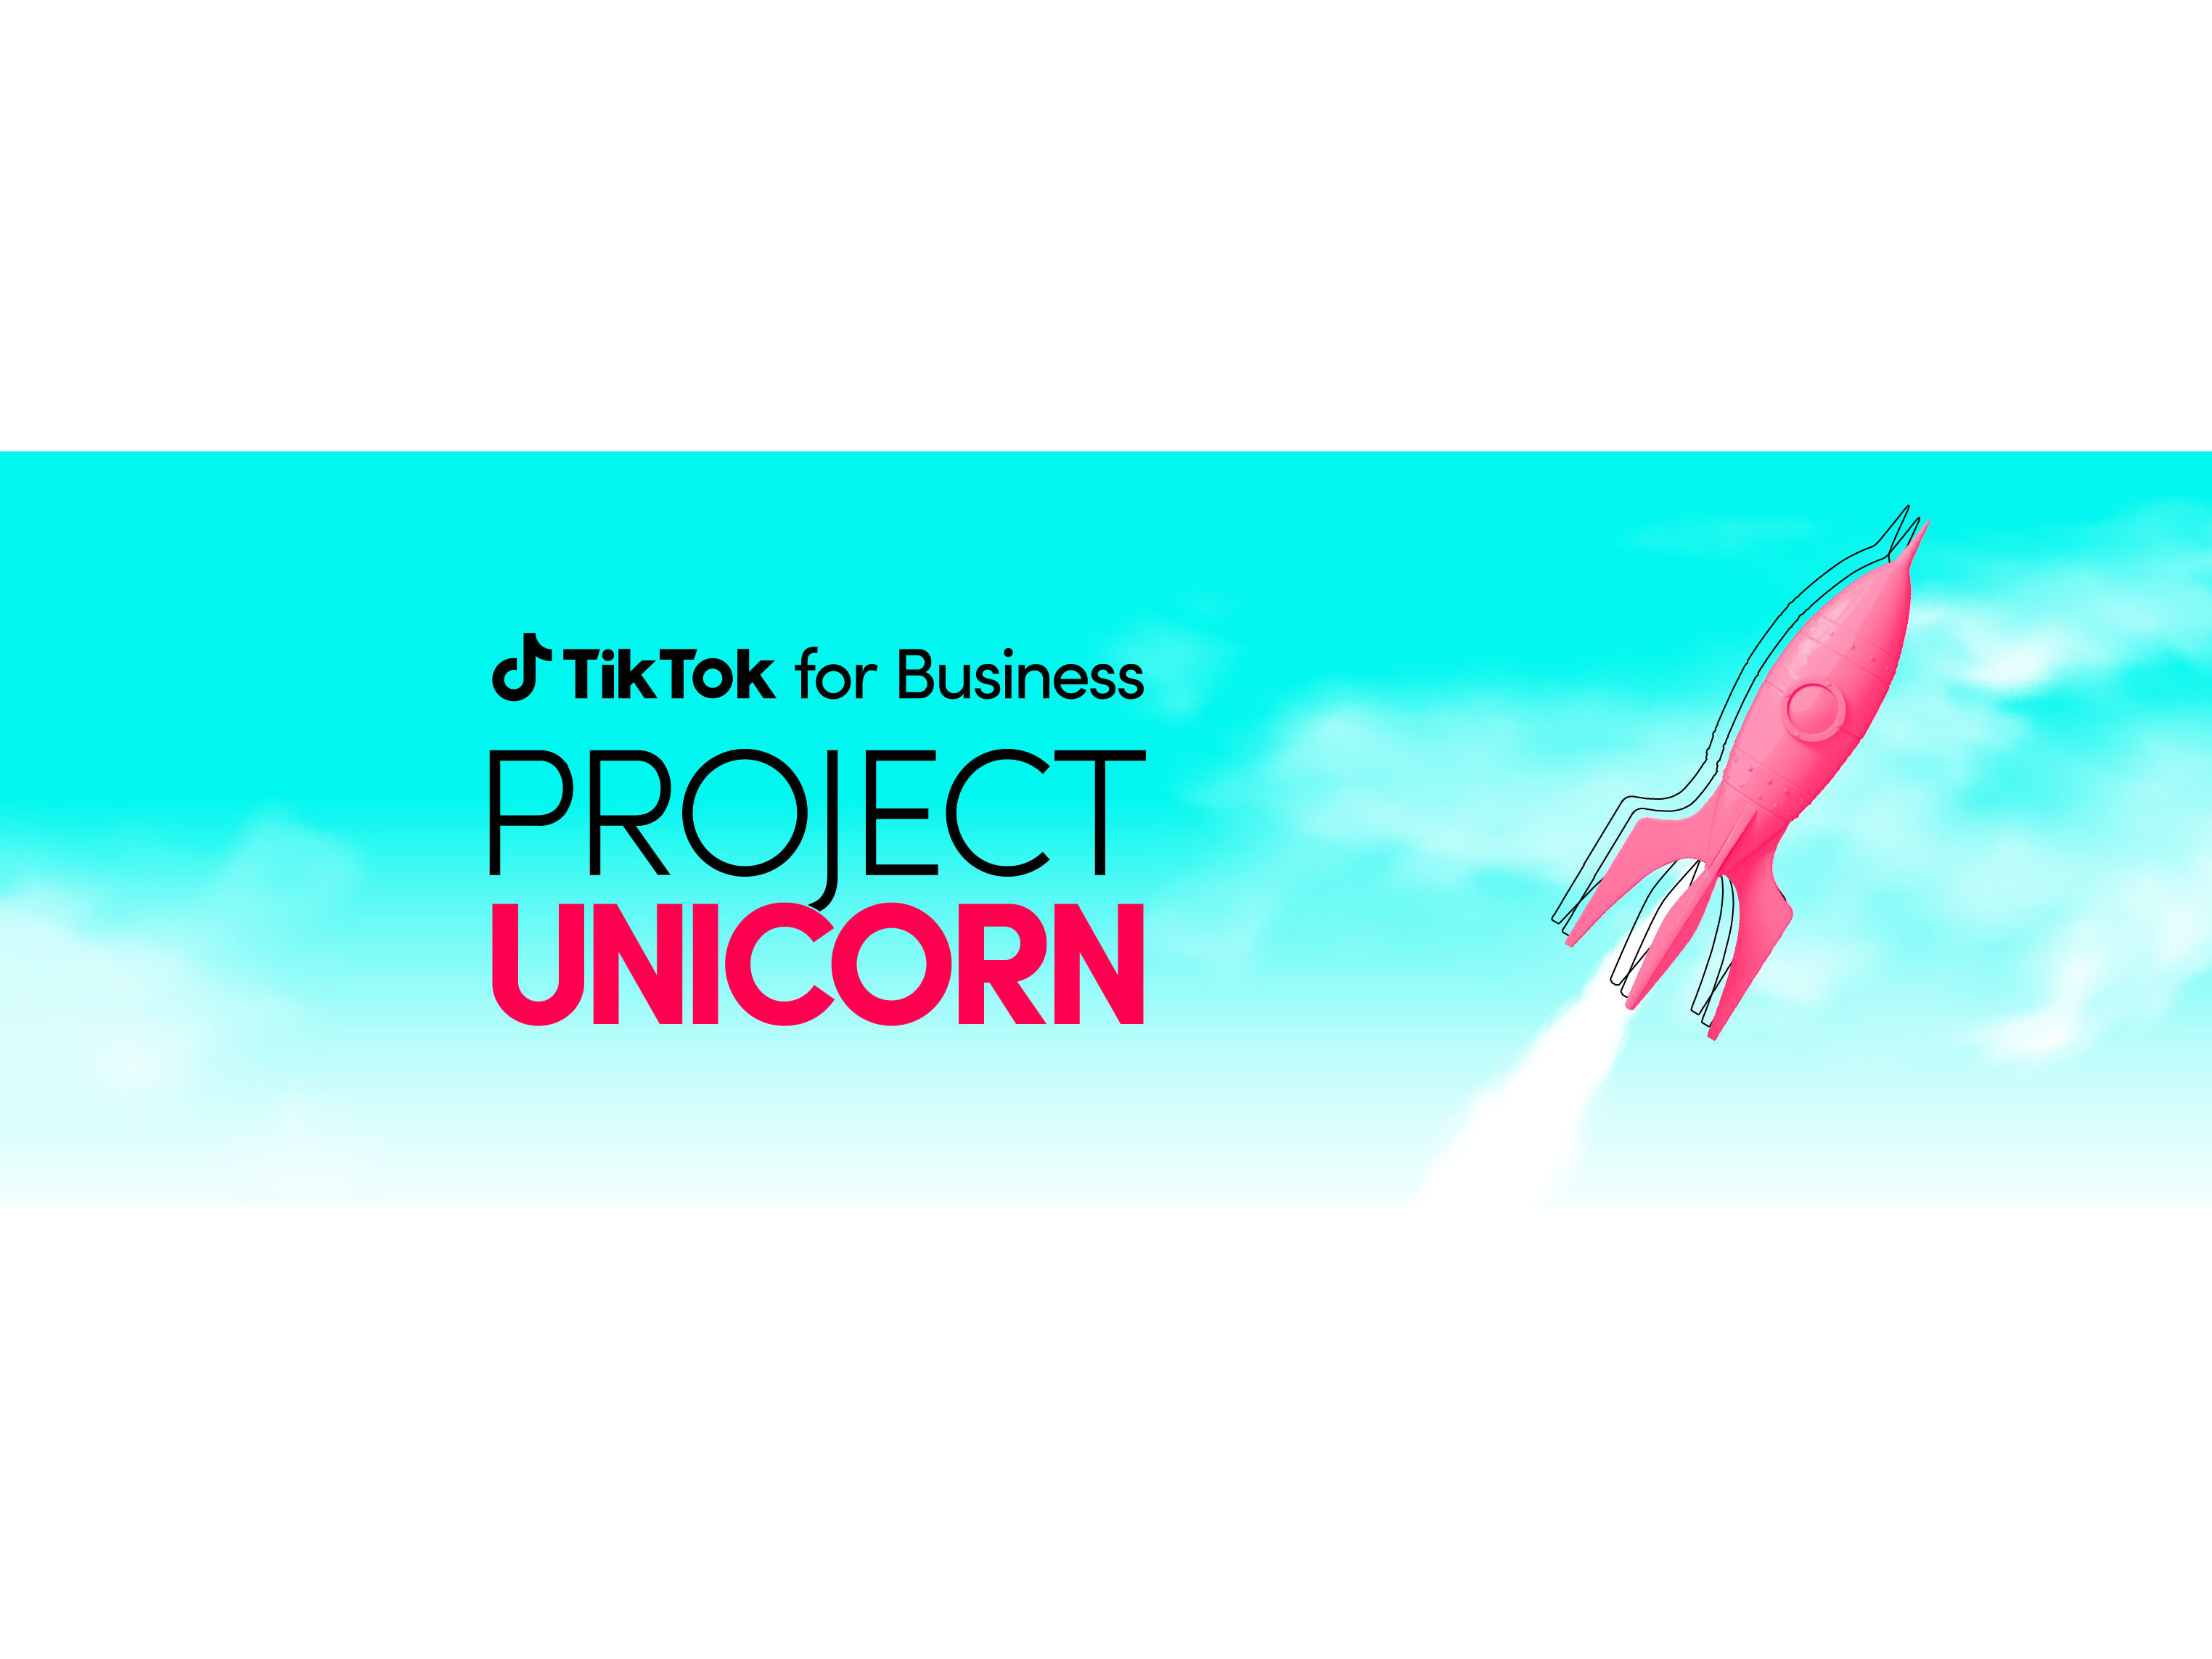 TikTok’s Project Unicorn provides opportunities for MENA startups 